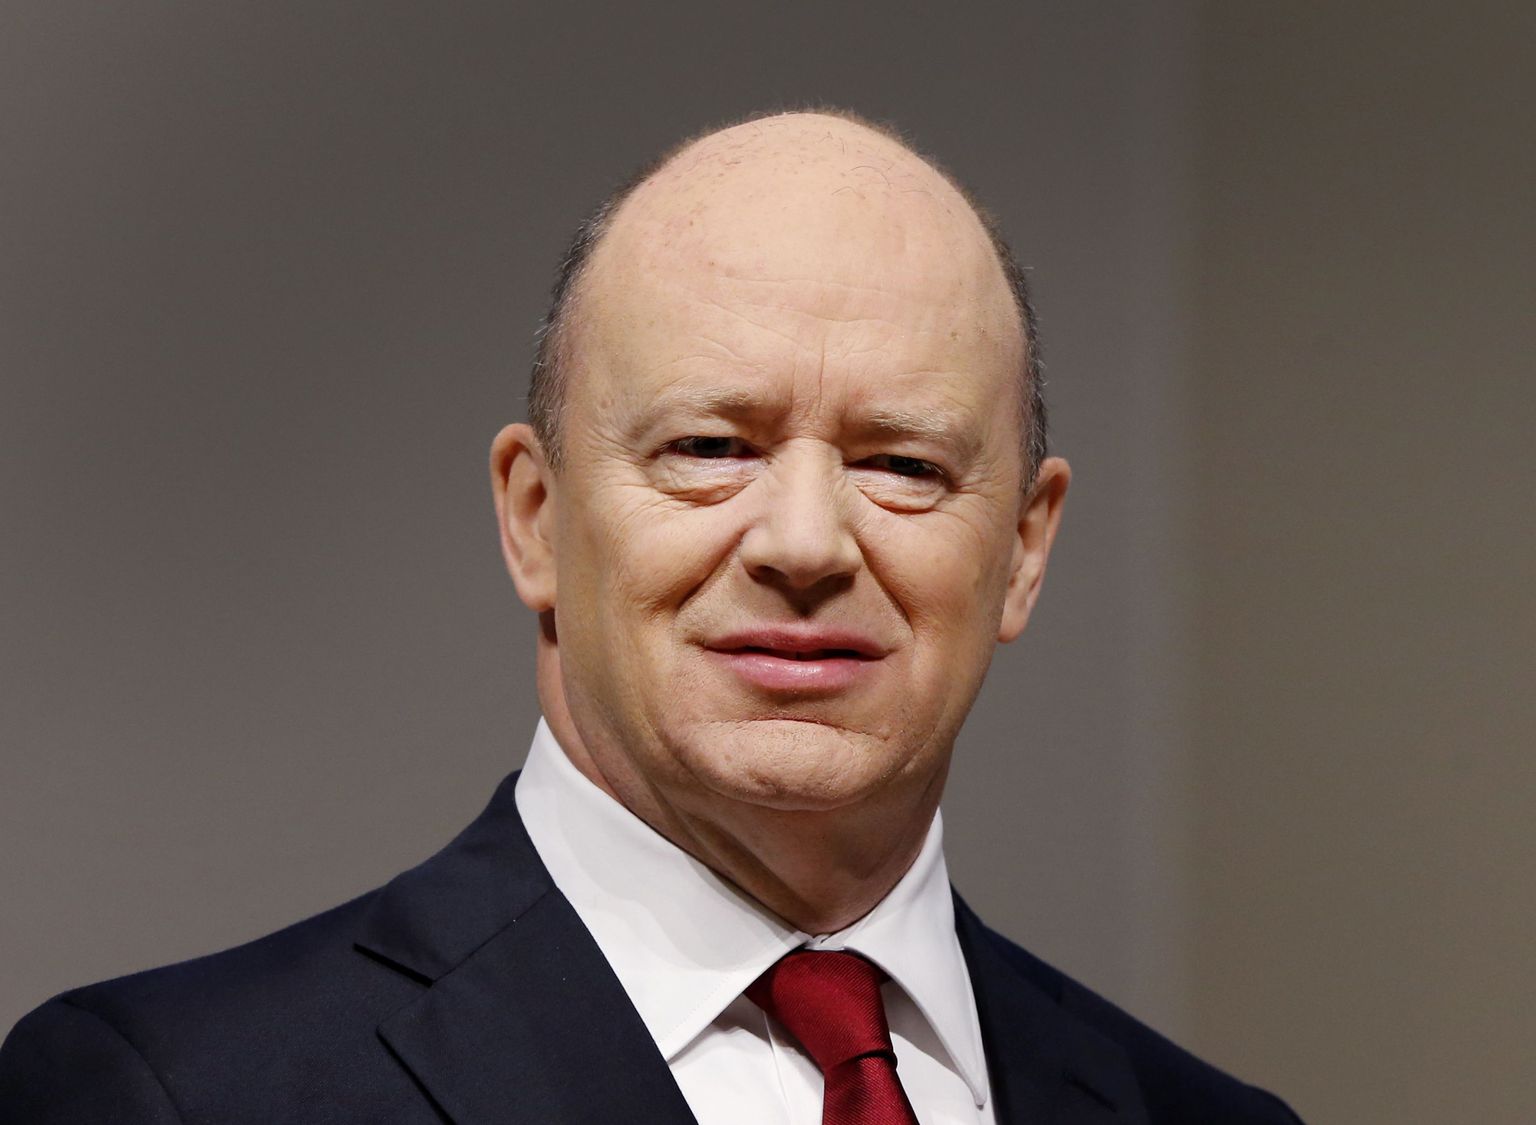 Deutsche Banki juht John Cryan.